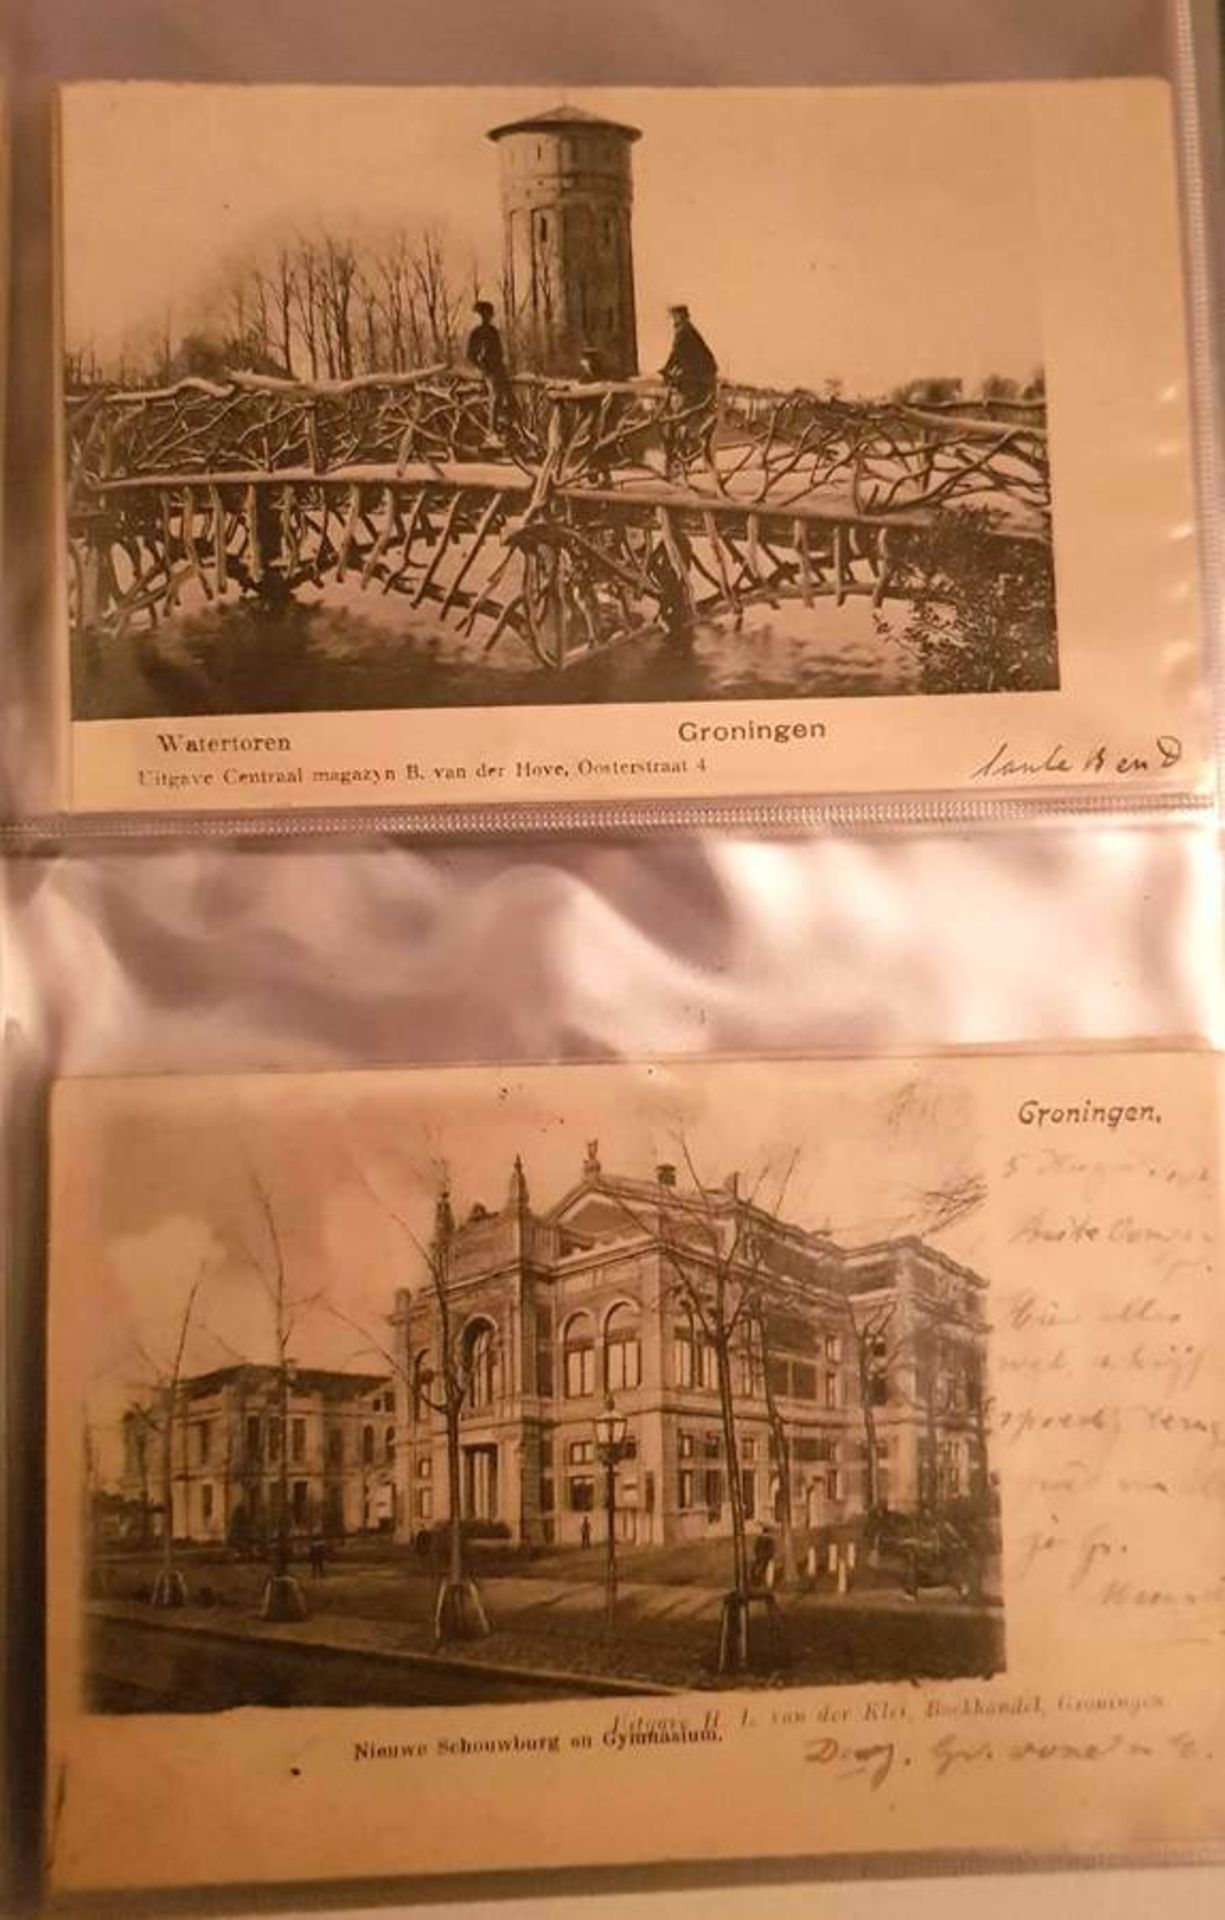 (Curiosa) AnsichtkaartenLot anischtkaarten mbt de stad Groningen Periode 1900-1920. In - Bild 4 aus 9